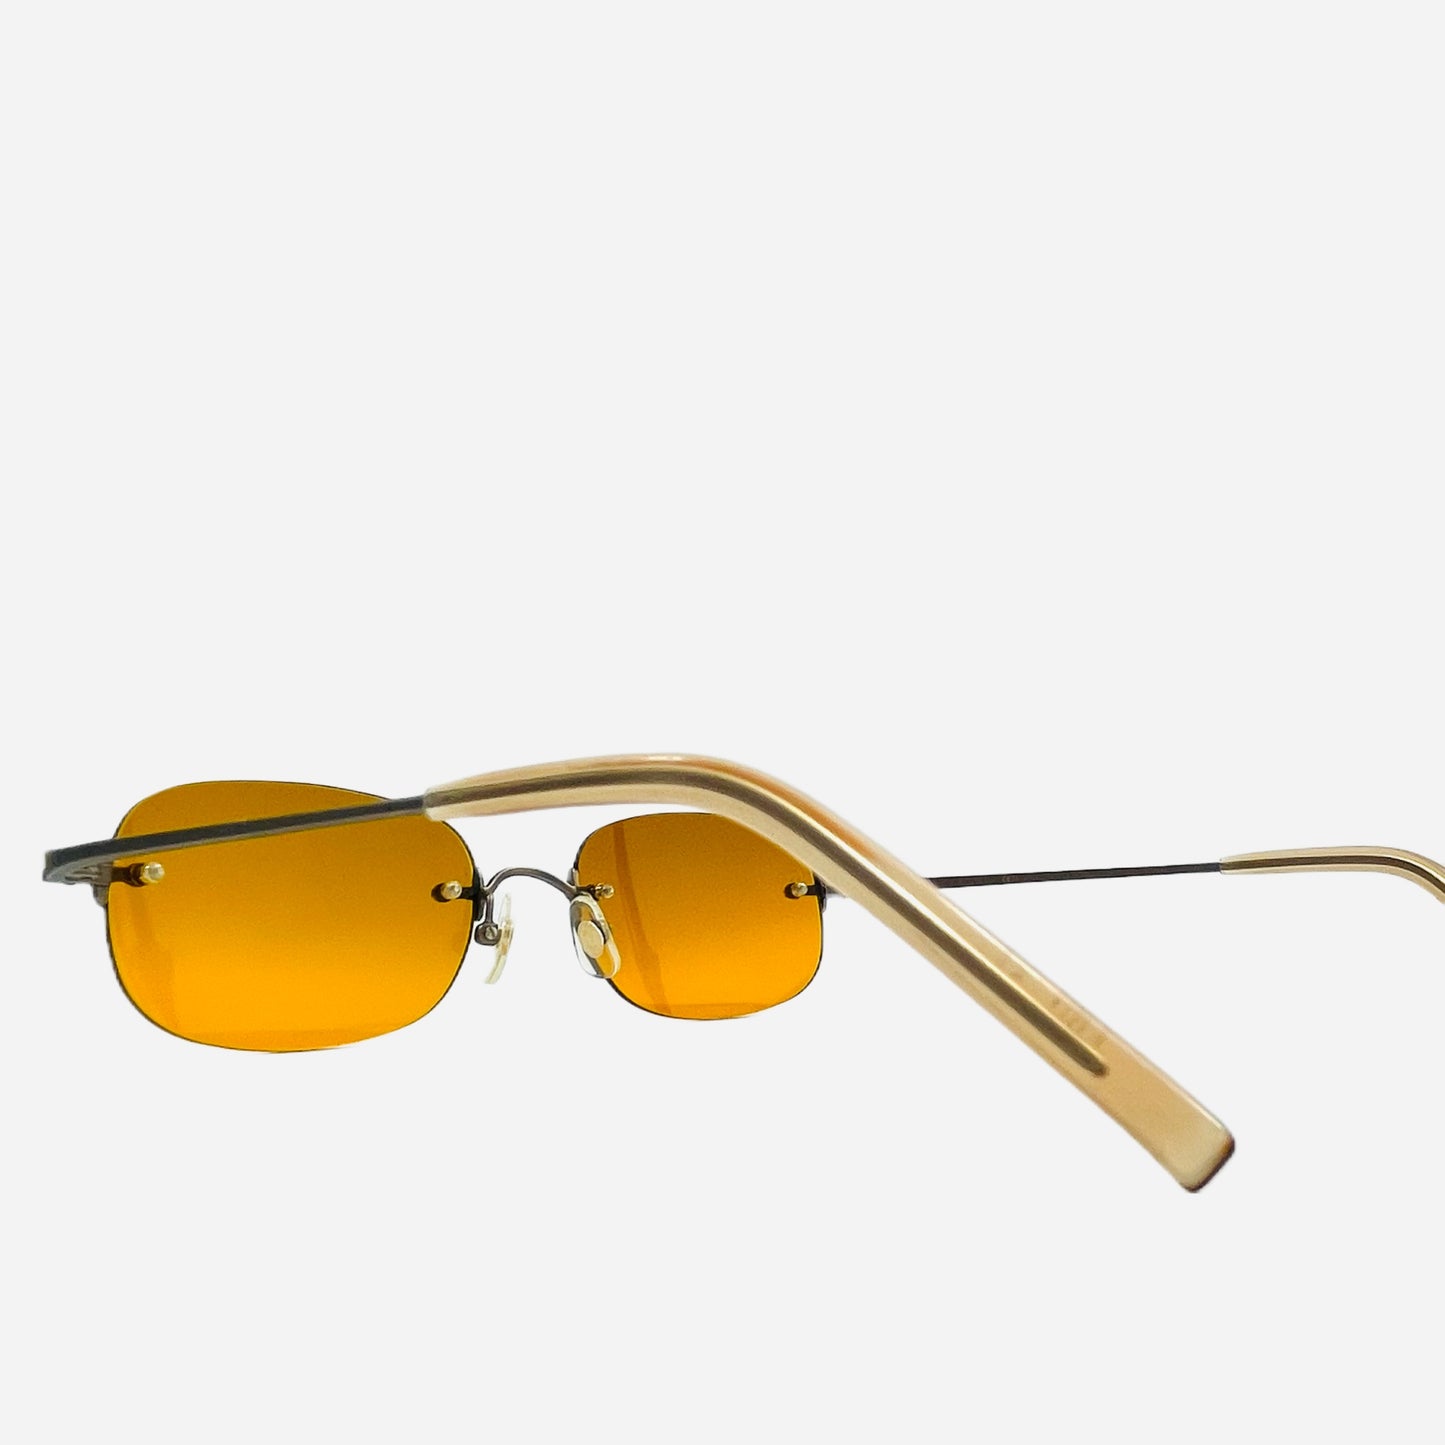 Vintage-Matsuda-Sonnenbrille-Sunglasses-rimless-rahmenlos-Custom-the-seekers-back-detail